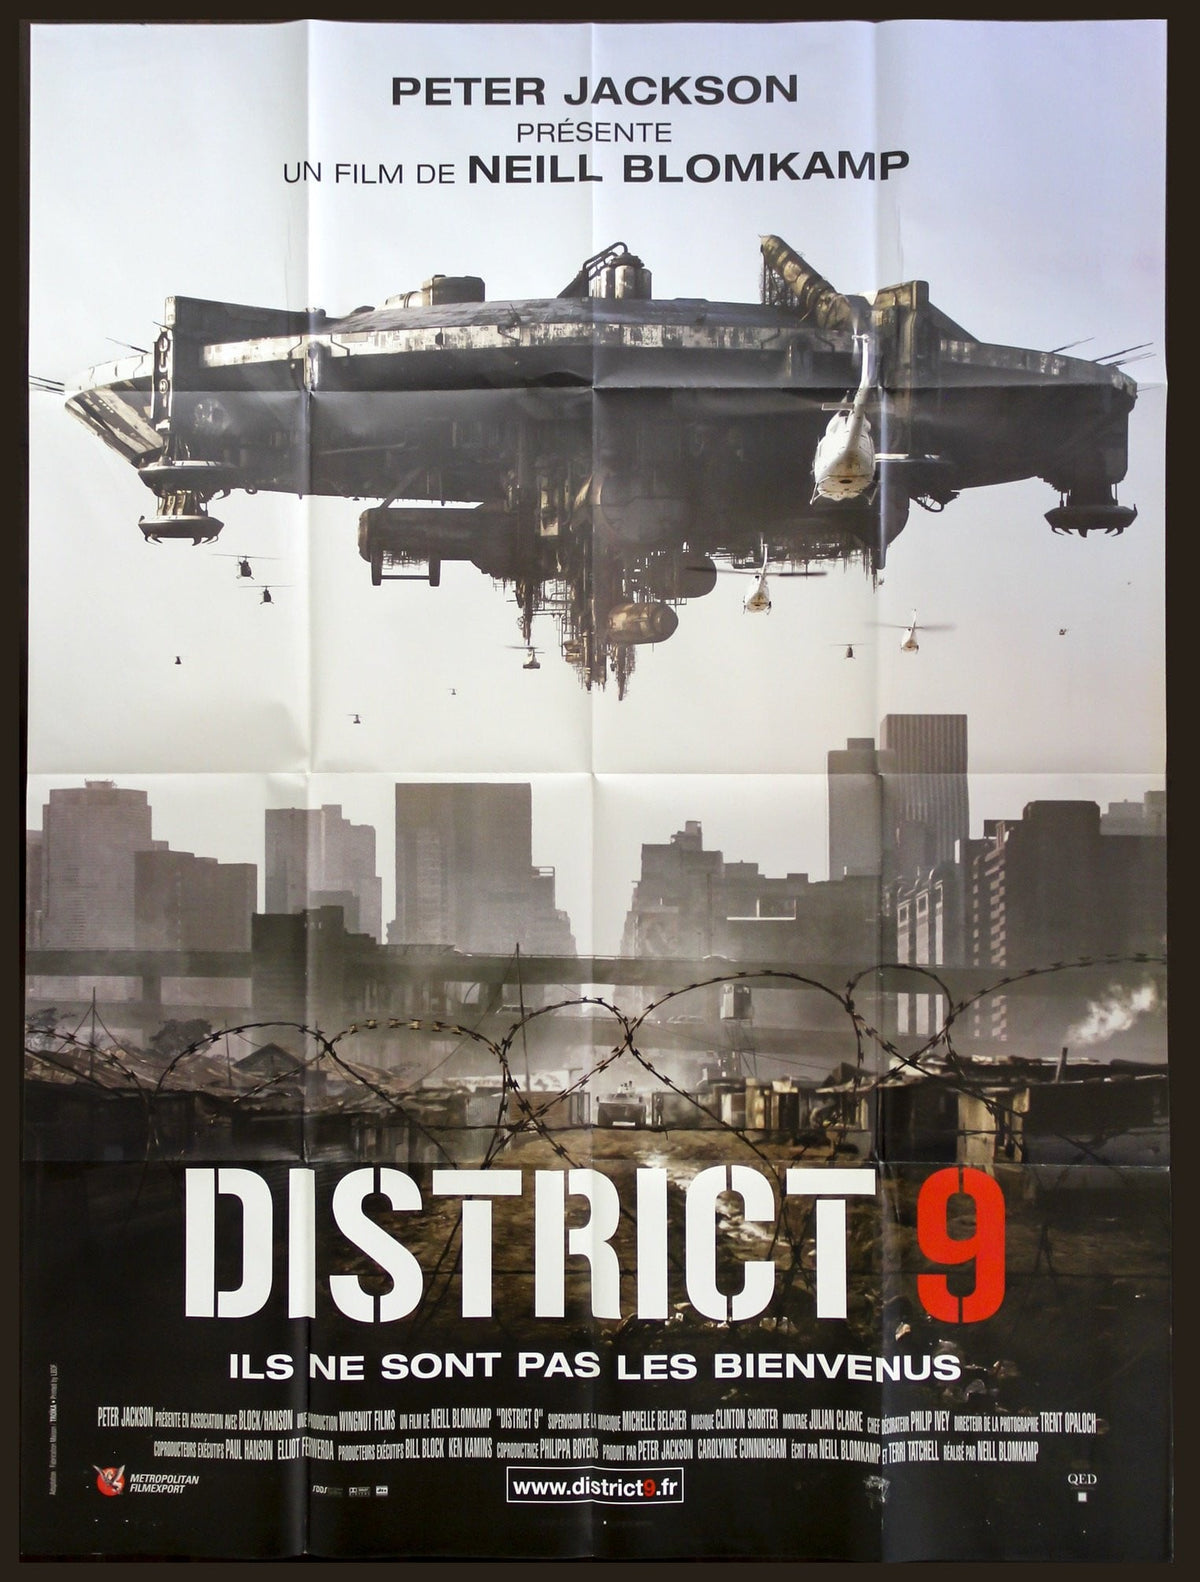 District 9 (2009) original movie poster for sale at Original Film Art